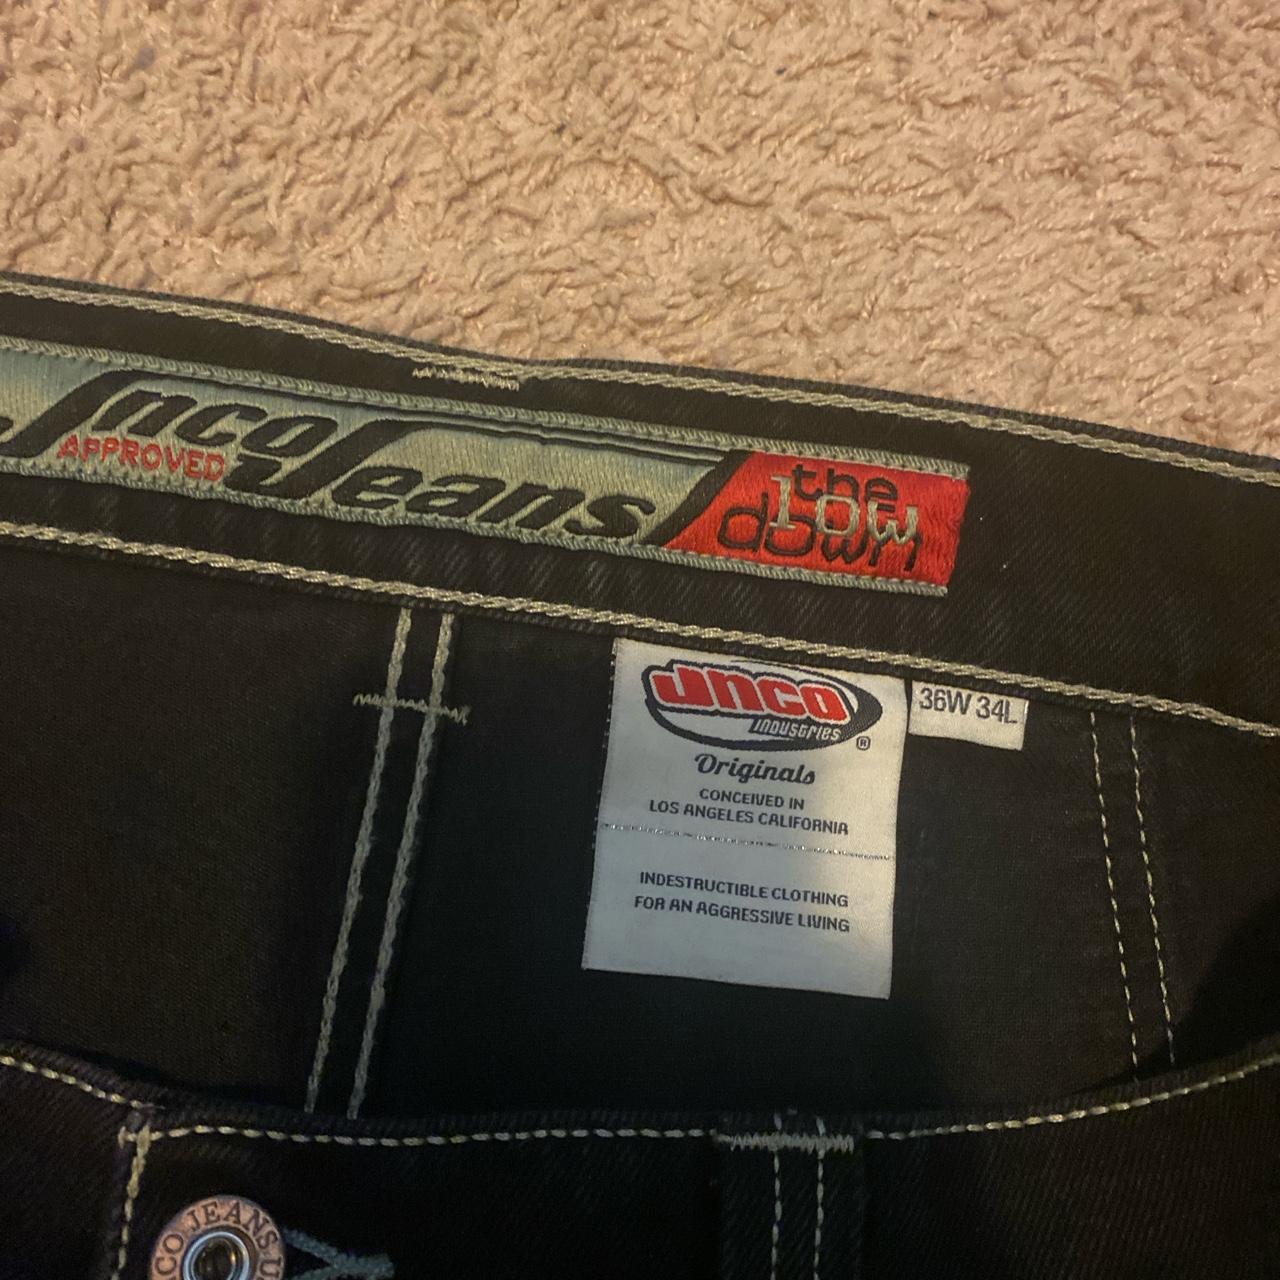 Jet Black Jnco Jeans Low down 169 Brand new only... - Depop